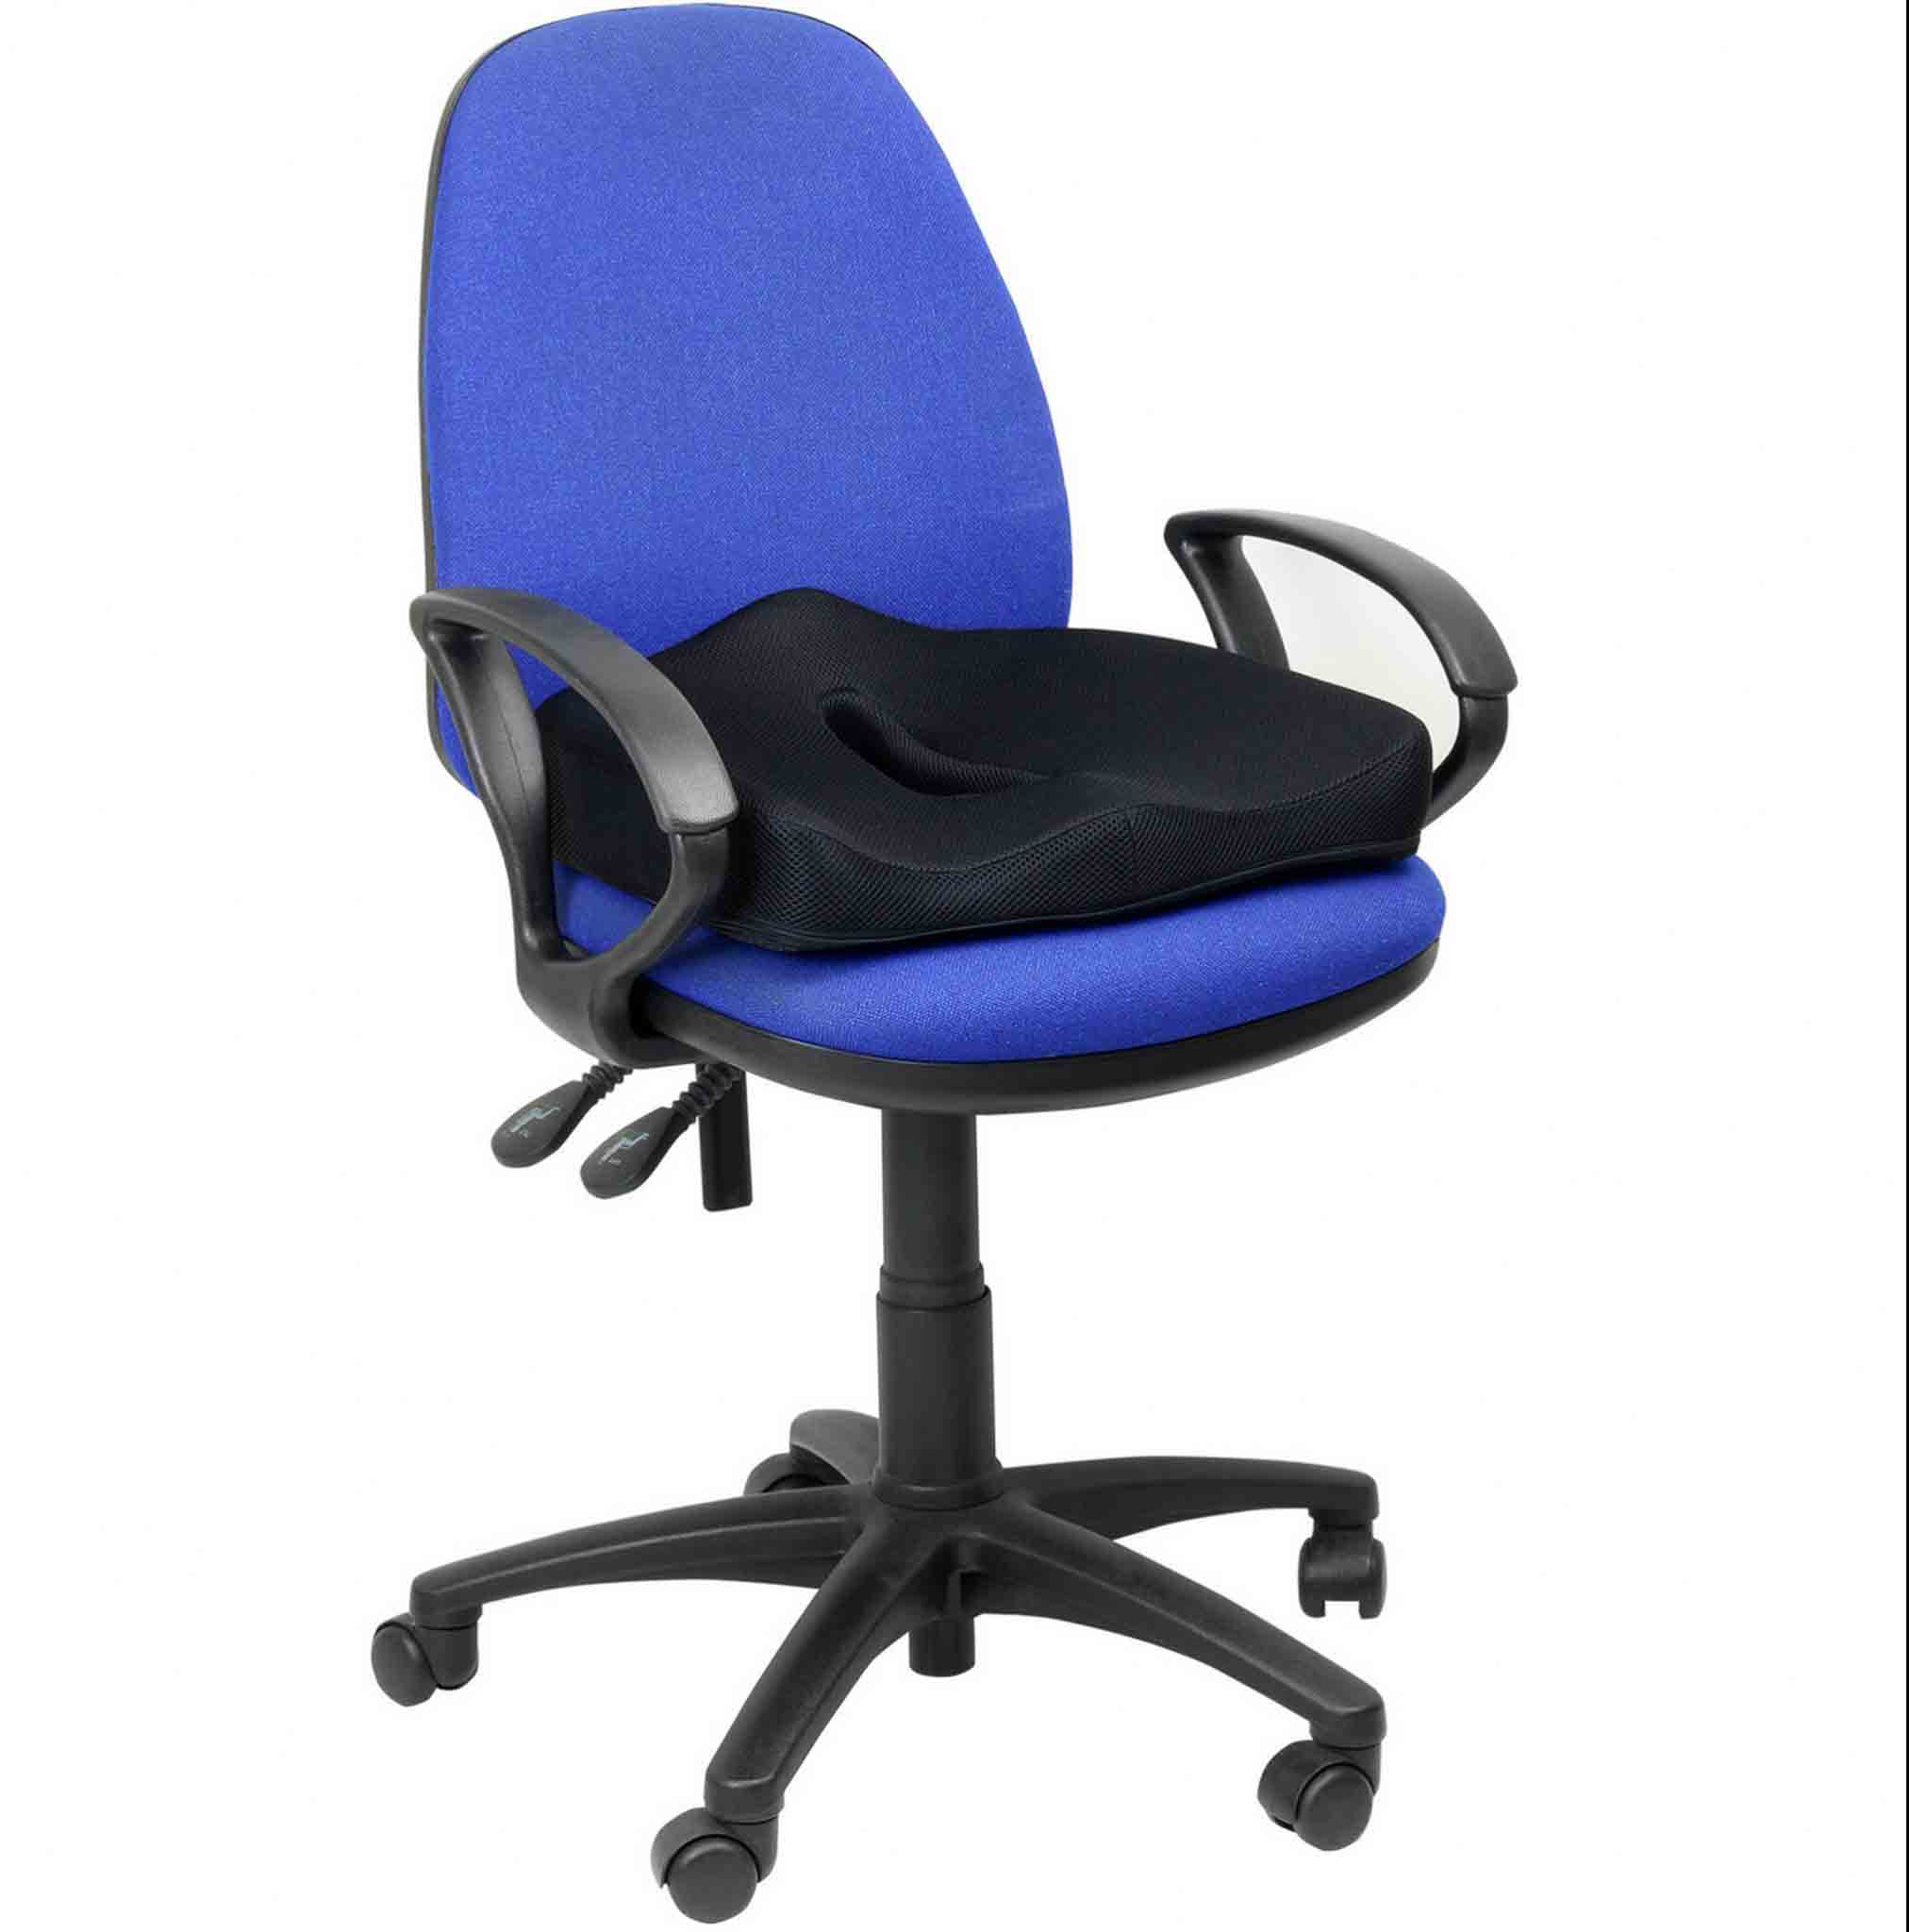 or8 wellness seat coccyx cushion